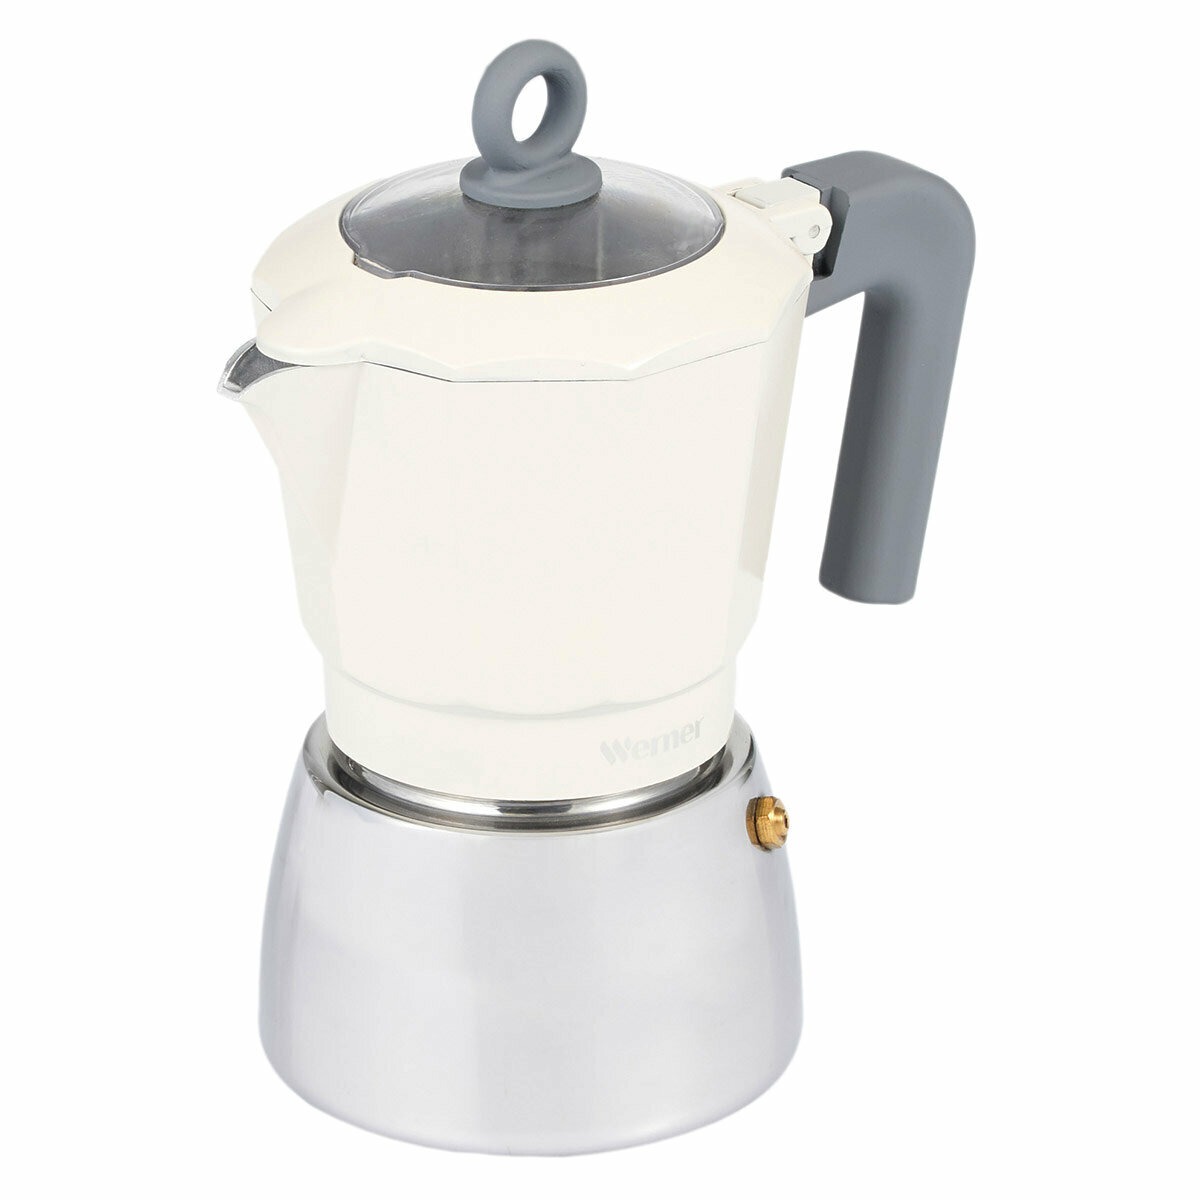 Гейзерная кофеварка Werner Estro молочно-бежевая 300 мл кофеварка гейзерная 300 мл алюминий дерево бежевая chalet